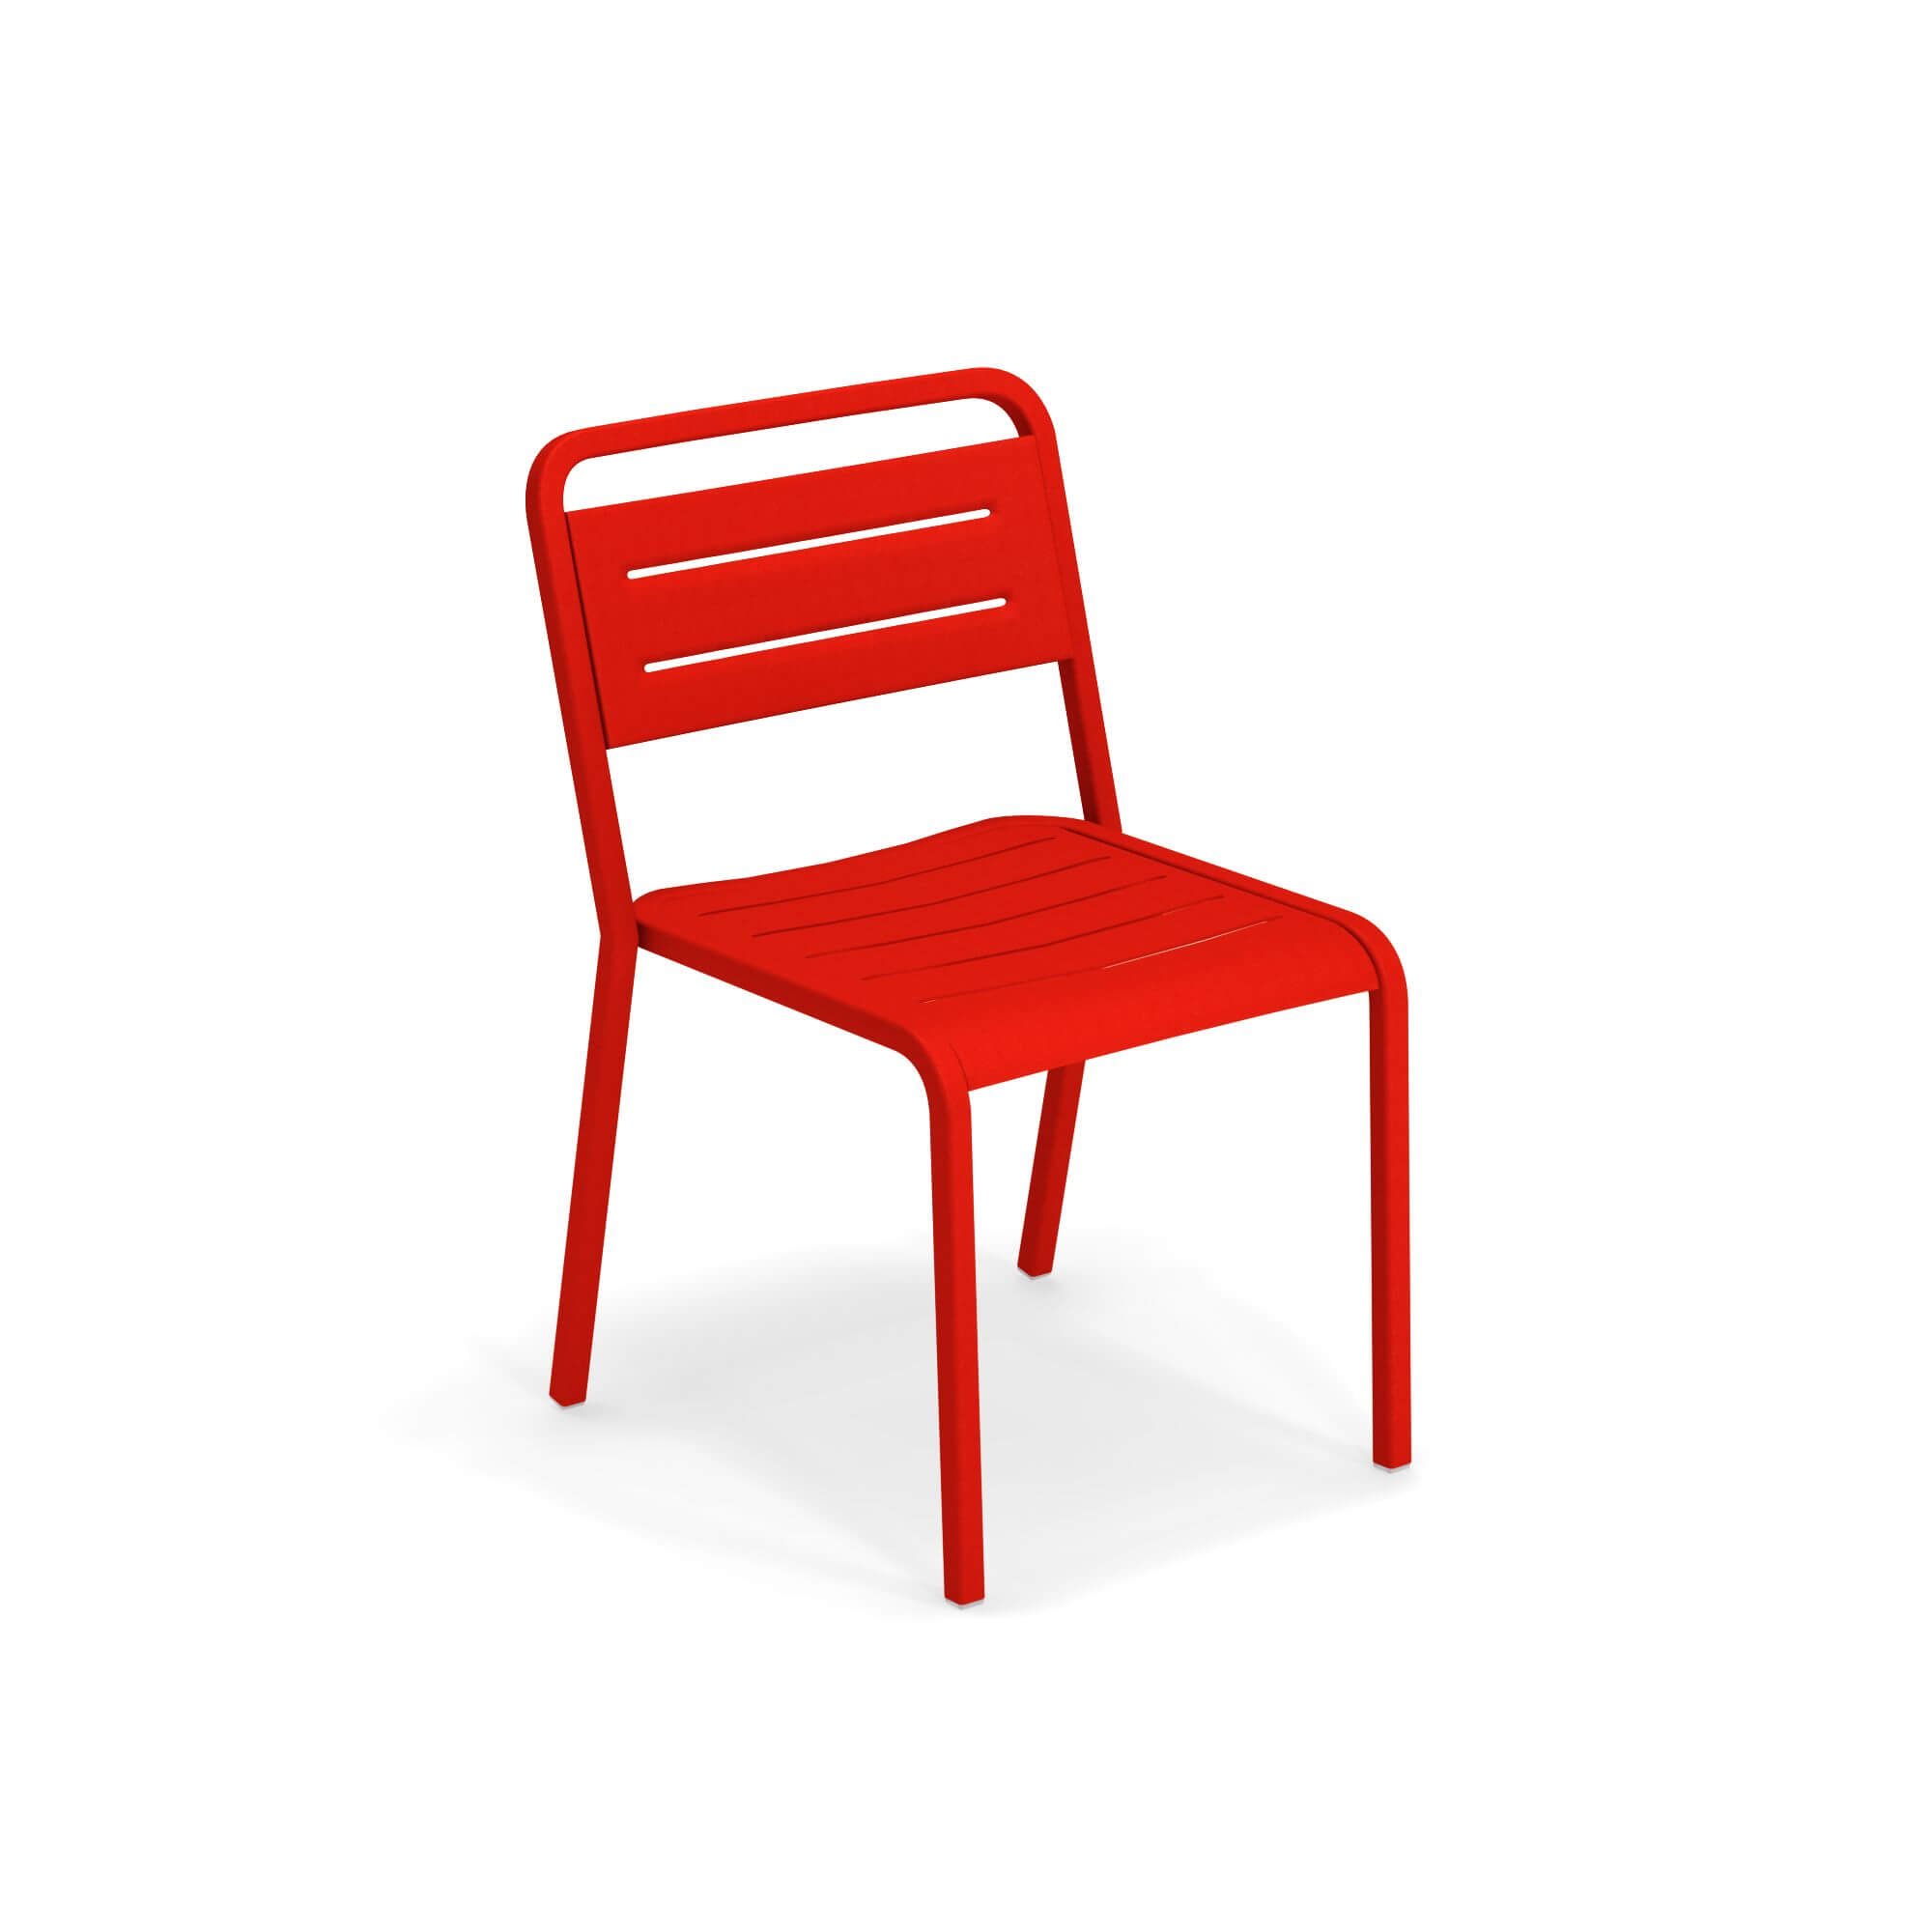 Urban Chair from Emu, designed by Samuel Wilkinson